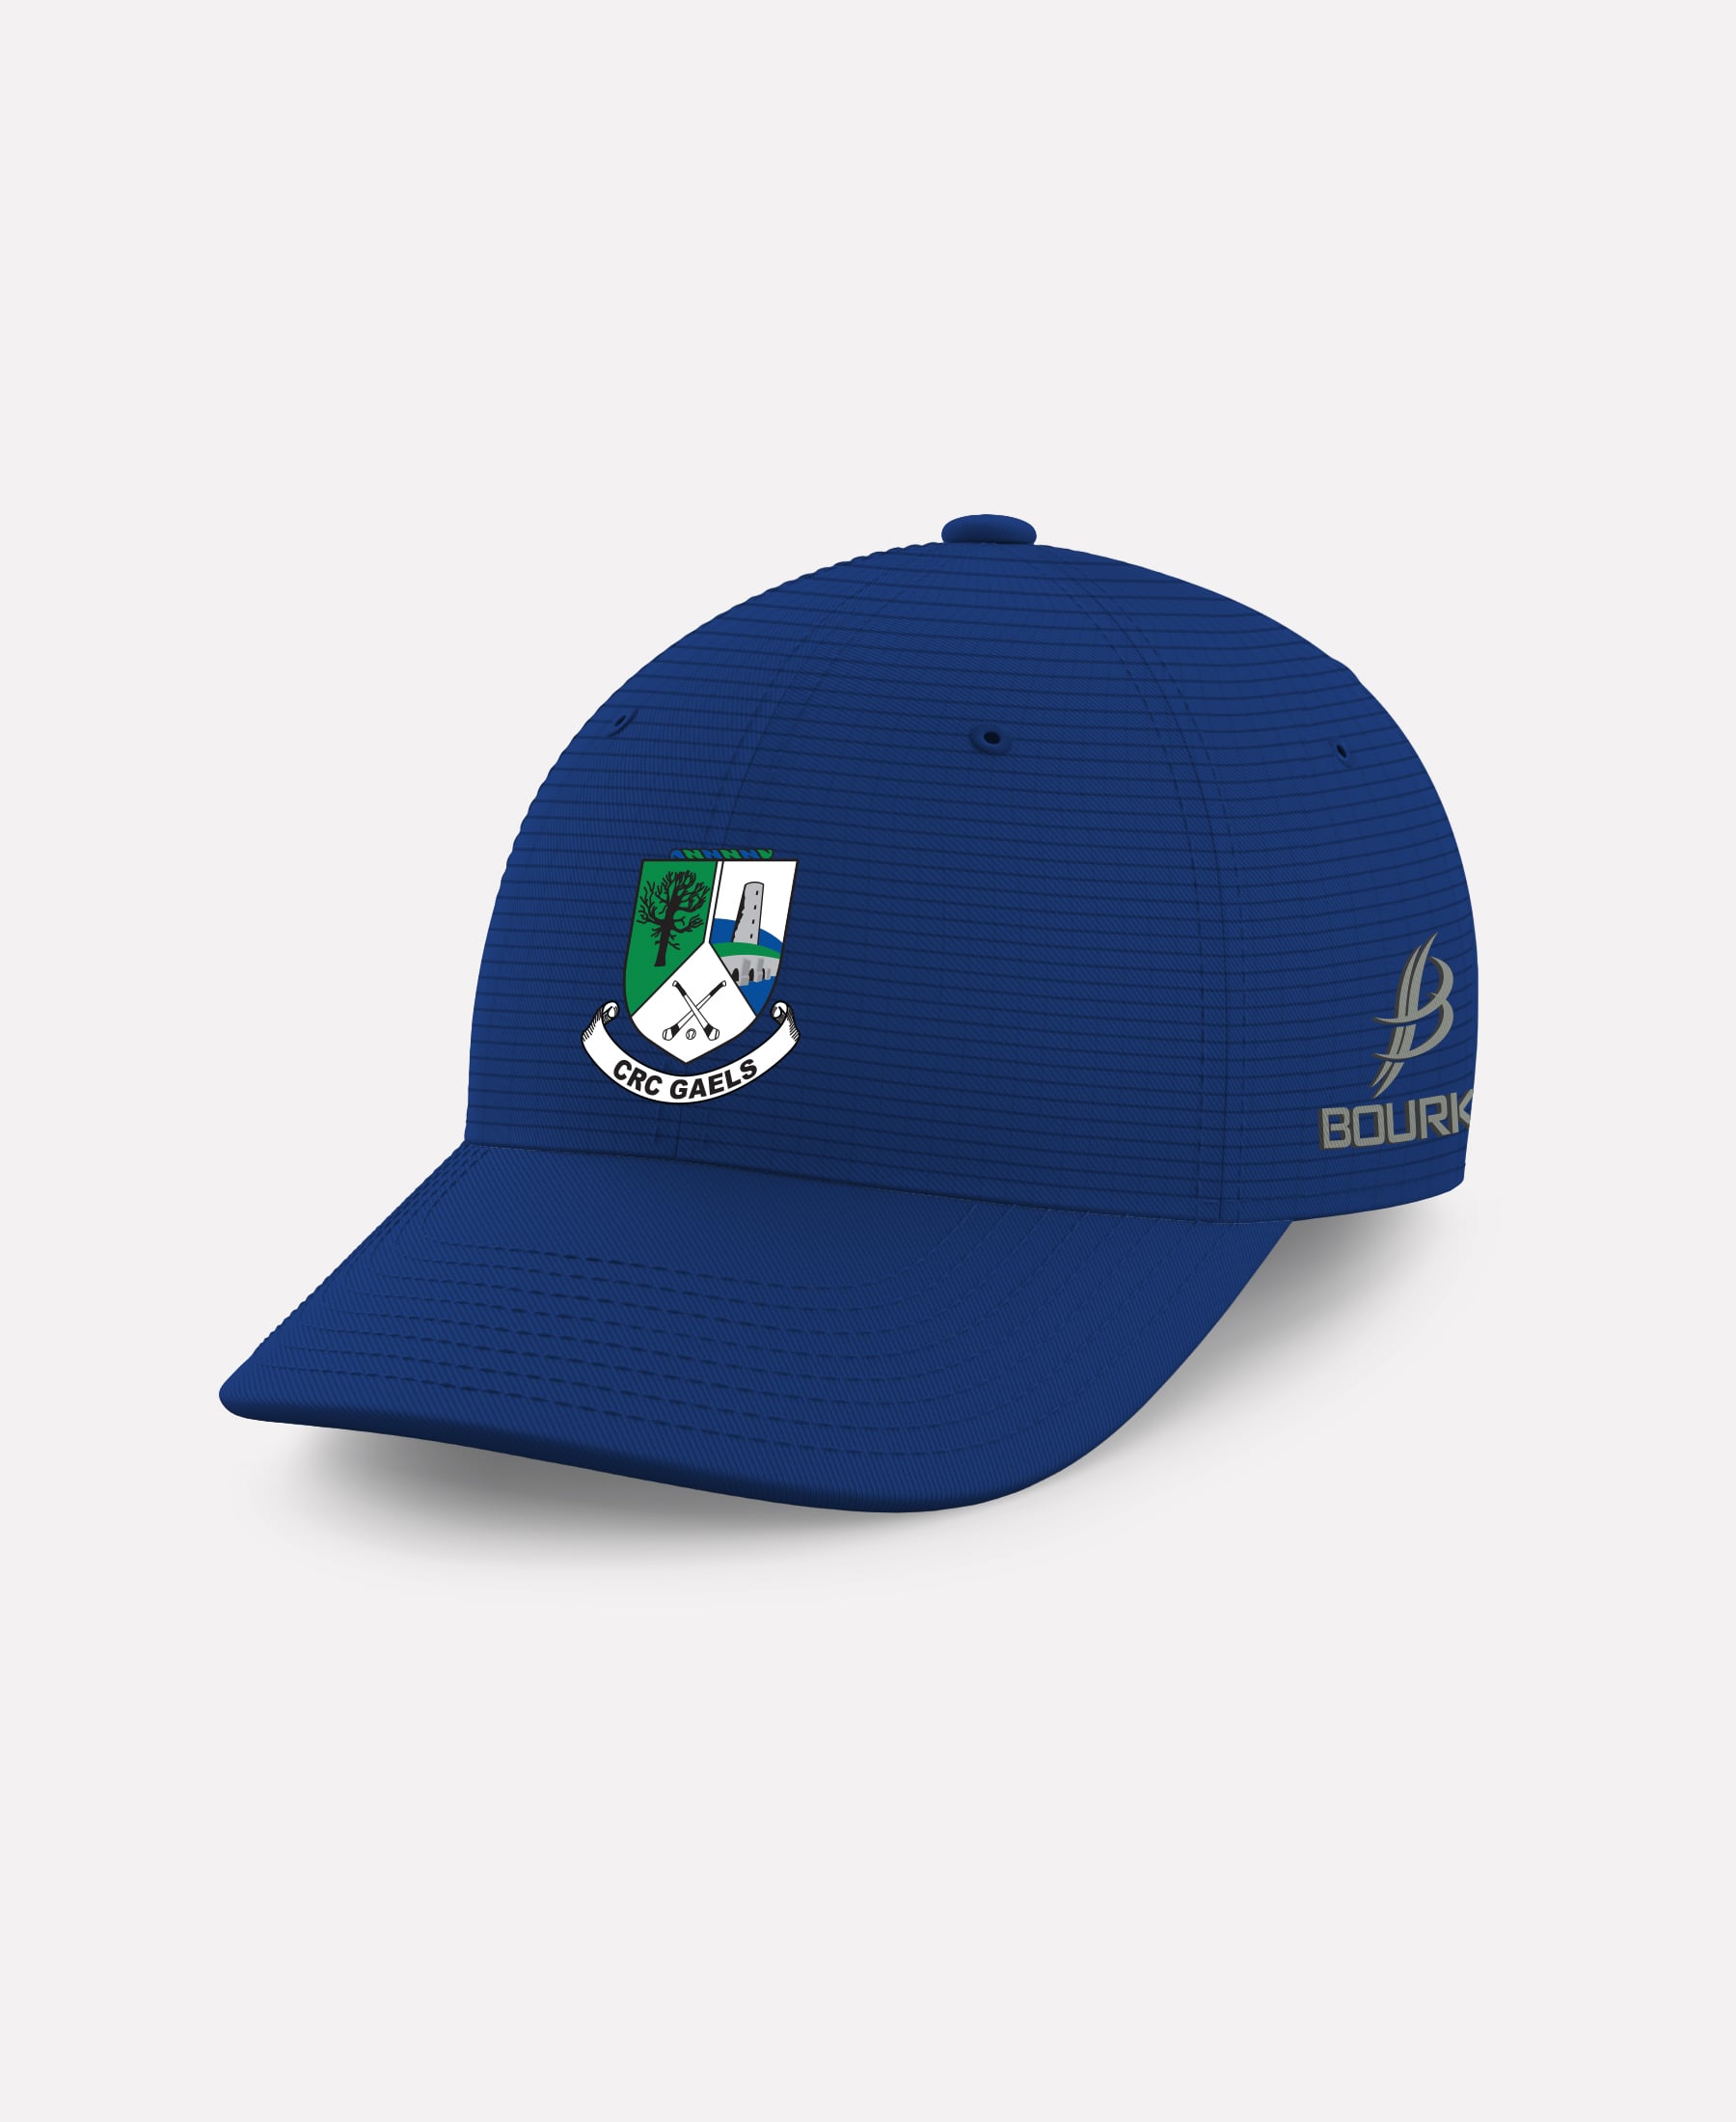 CRC Gaels CROGA Baseball Cap (Blue)